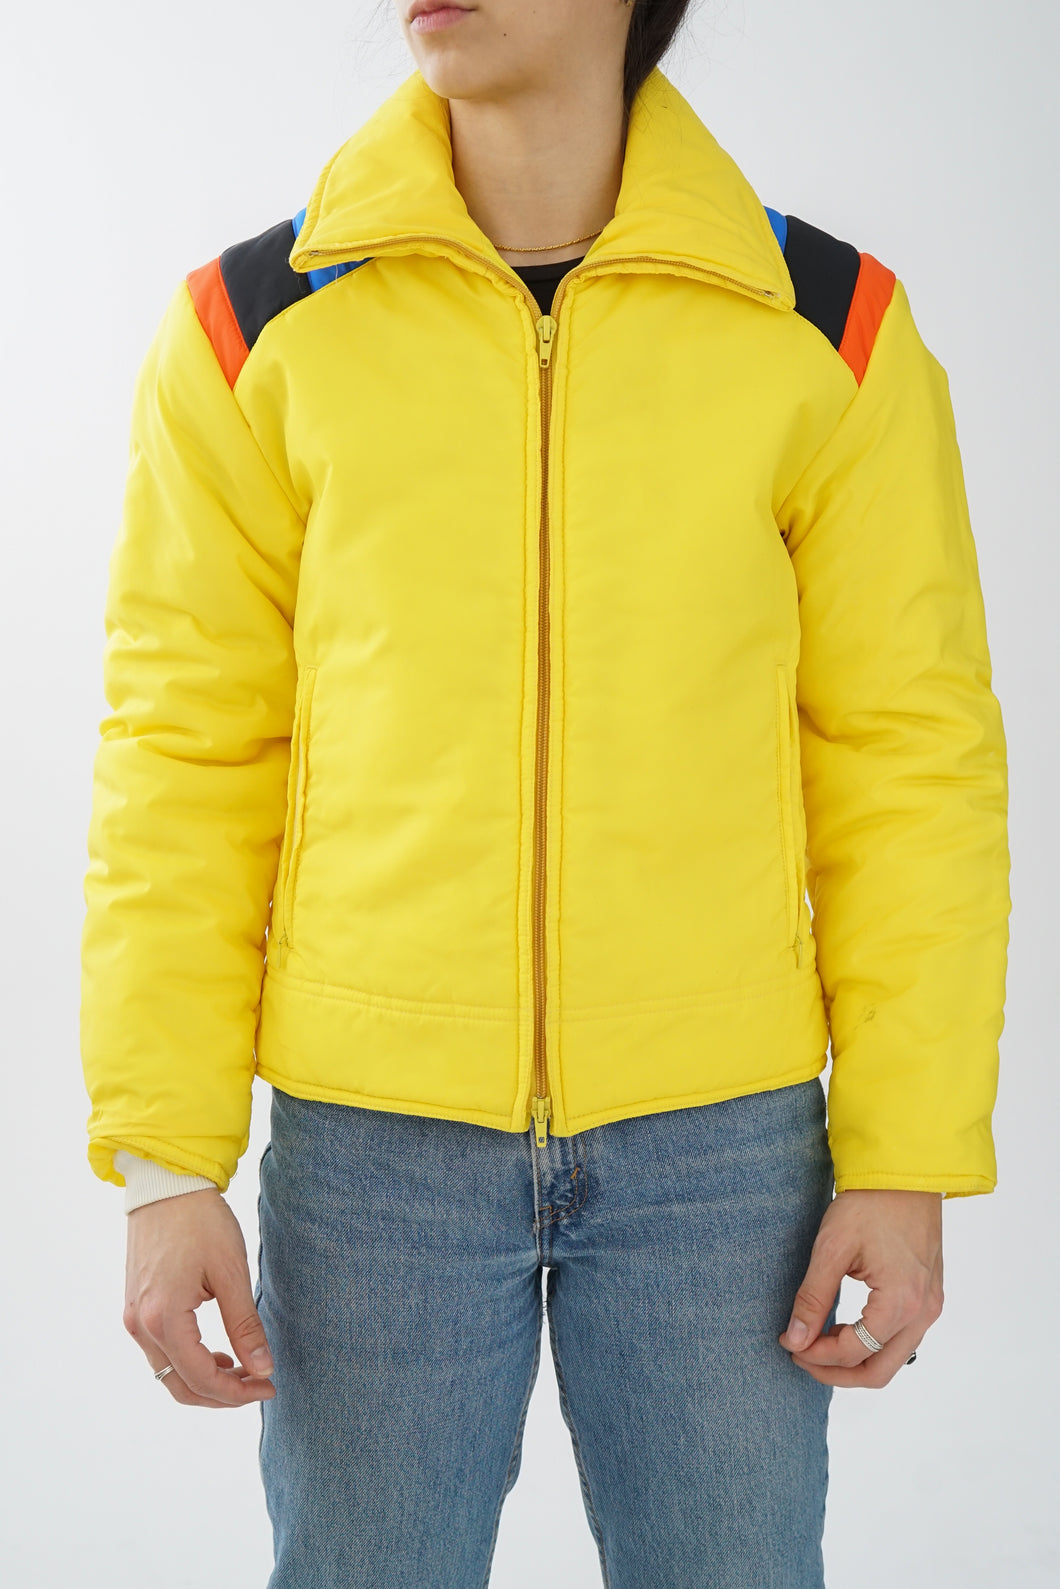 Manteau de ski vintage 70s Scandia Trading Co jaune unisex taille XS-S